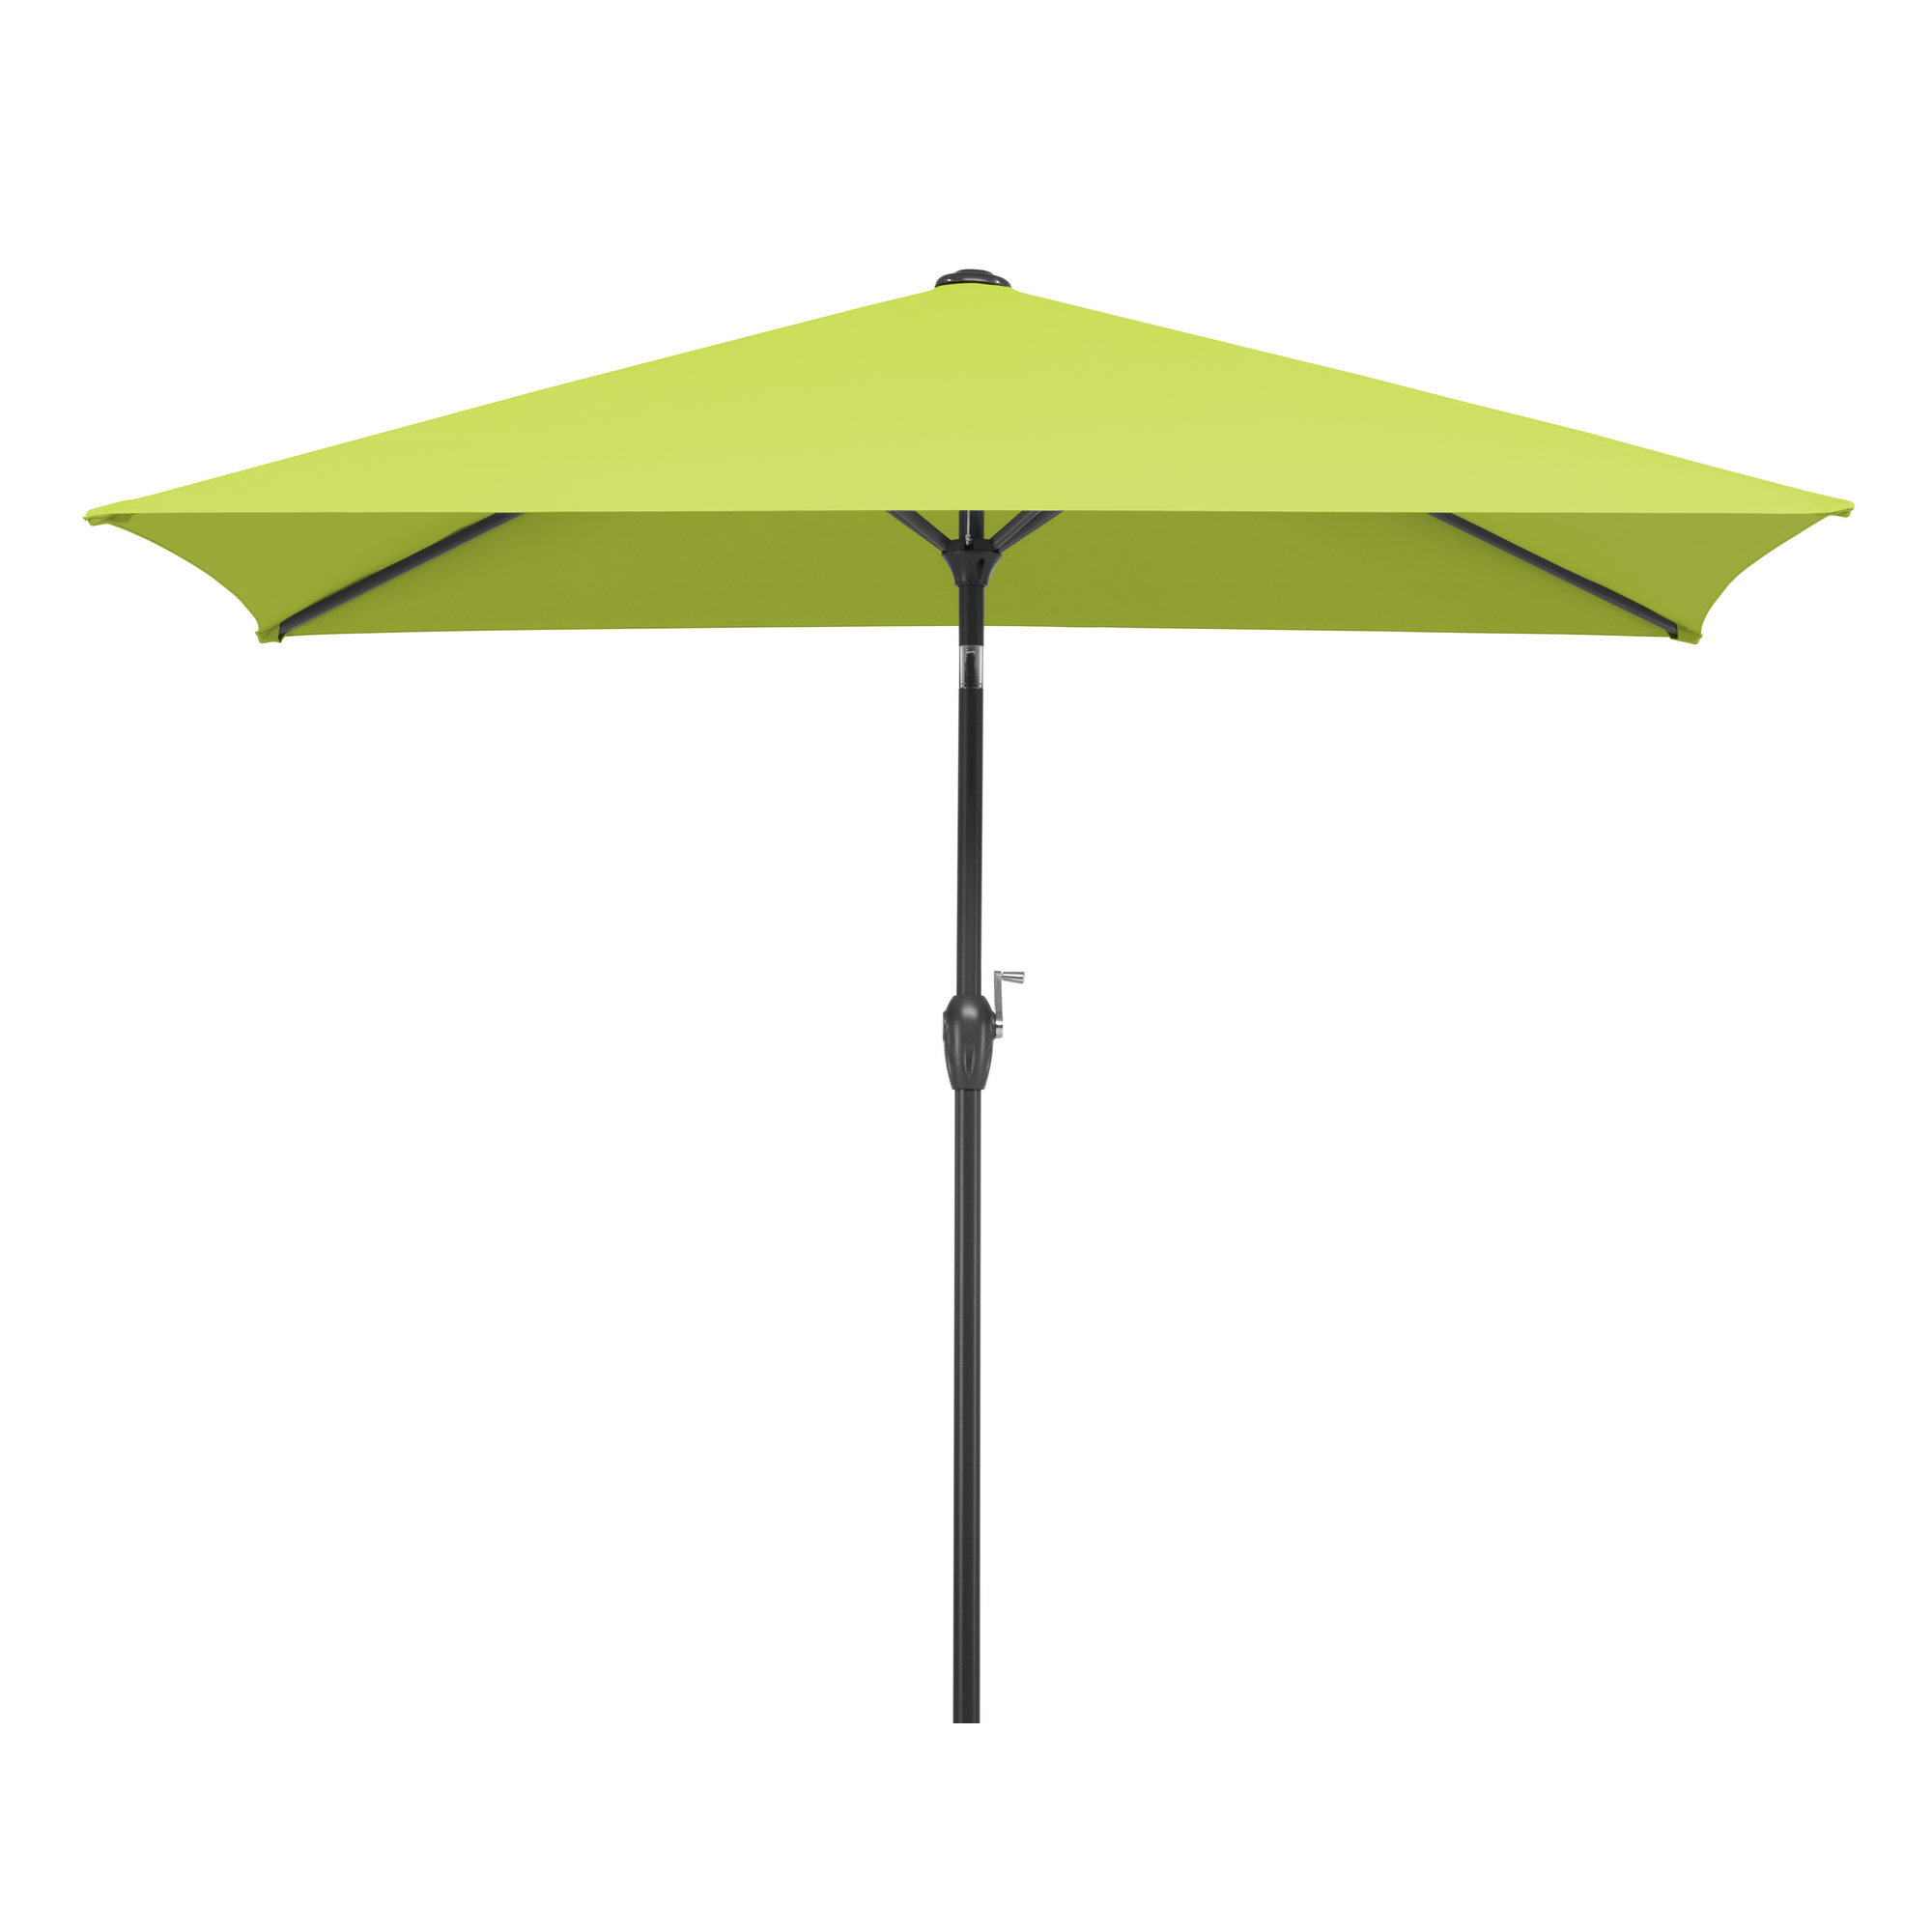 NEU 3 x 4m Marktschirm Marktstand Umbrella Schirm Sonnenschirm in Apfelgrün !!! 